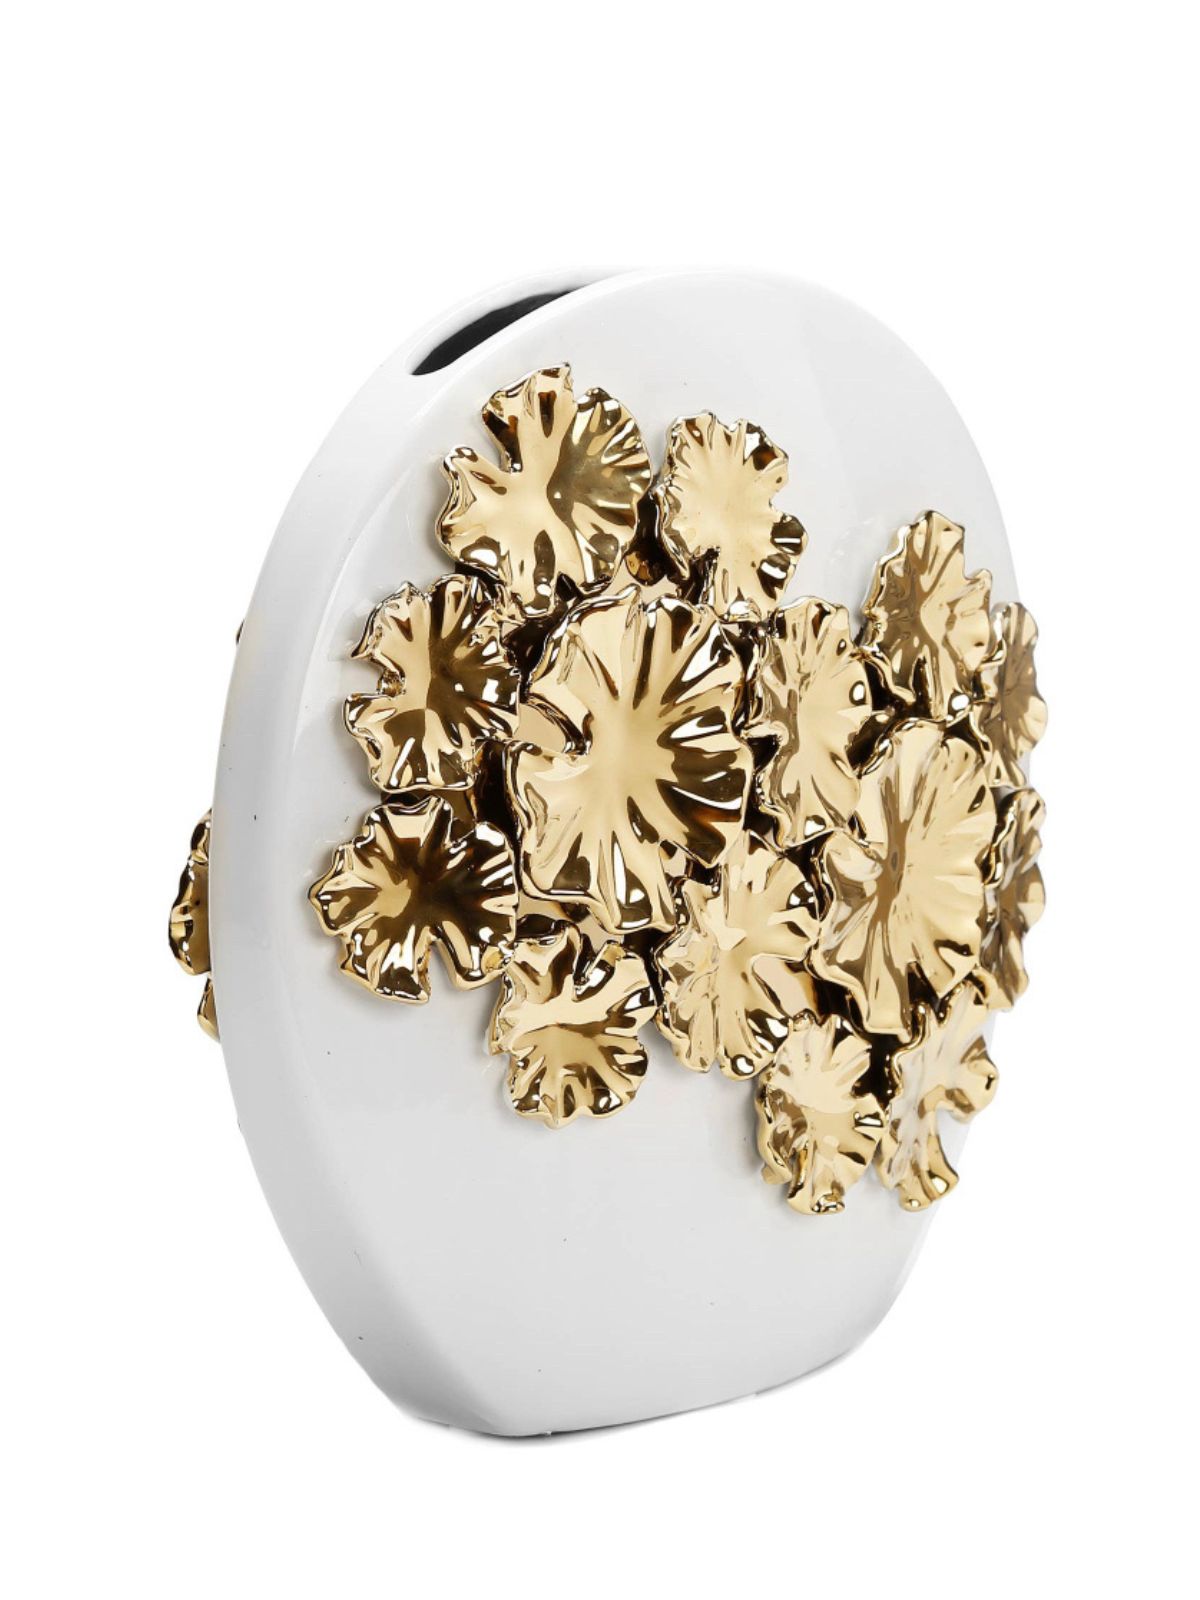 12D White Round Ceramic Decorative Vase with Luxury Gold Flower Petals - KYA Home Decor